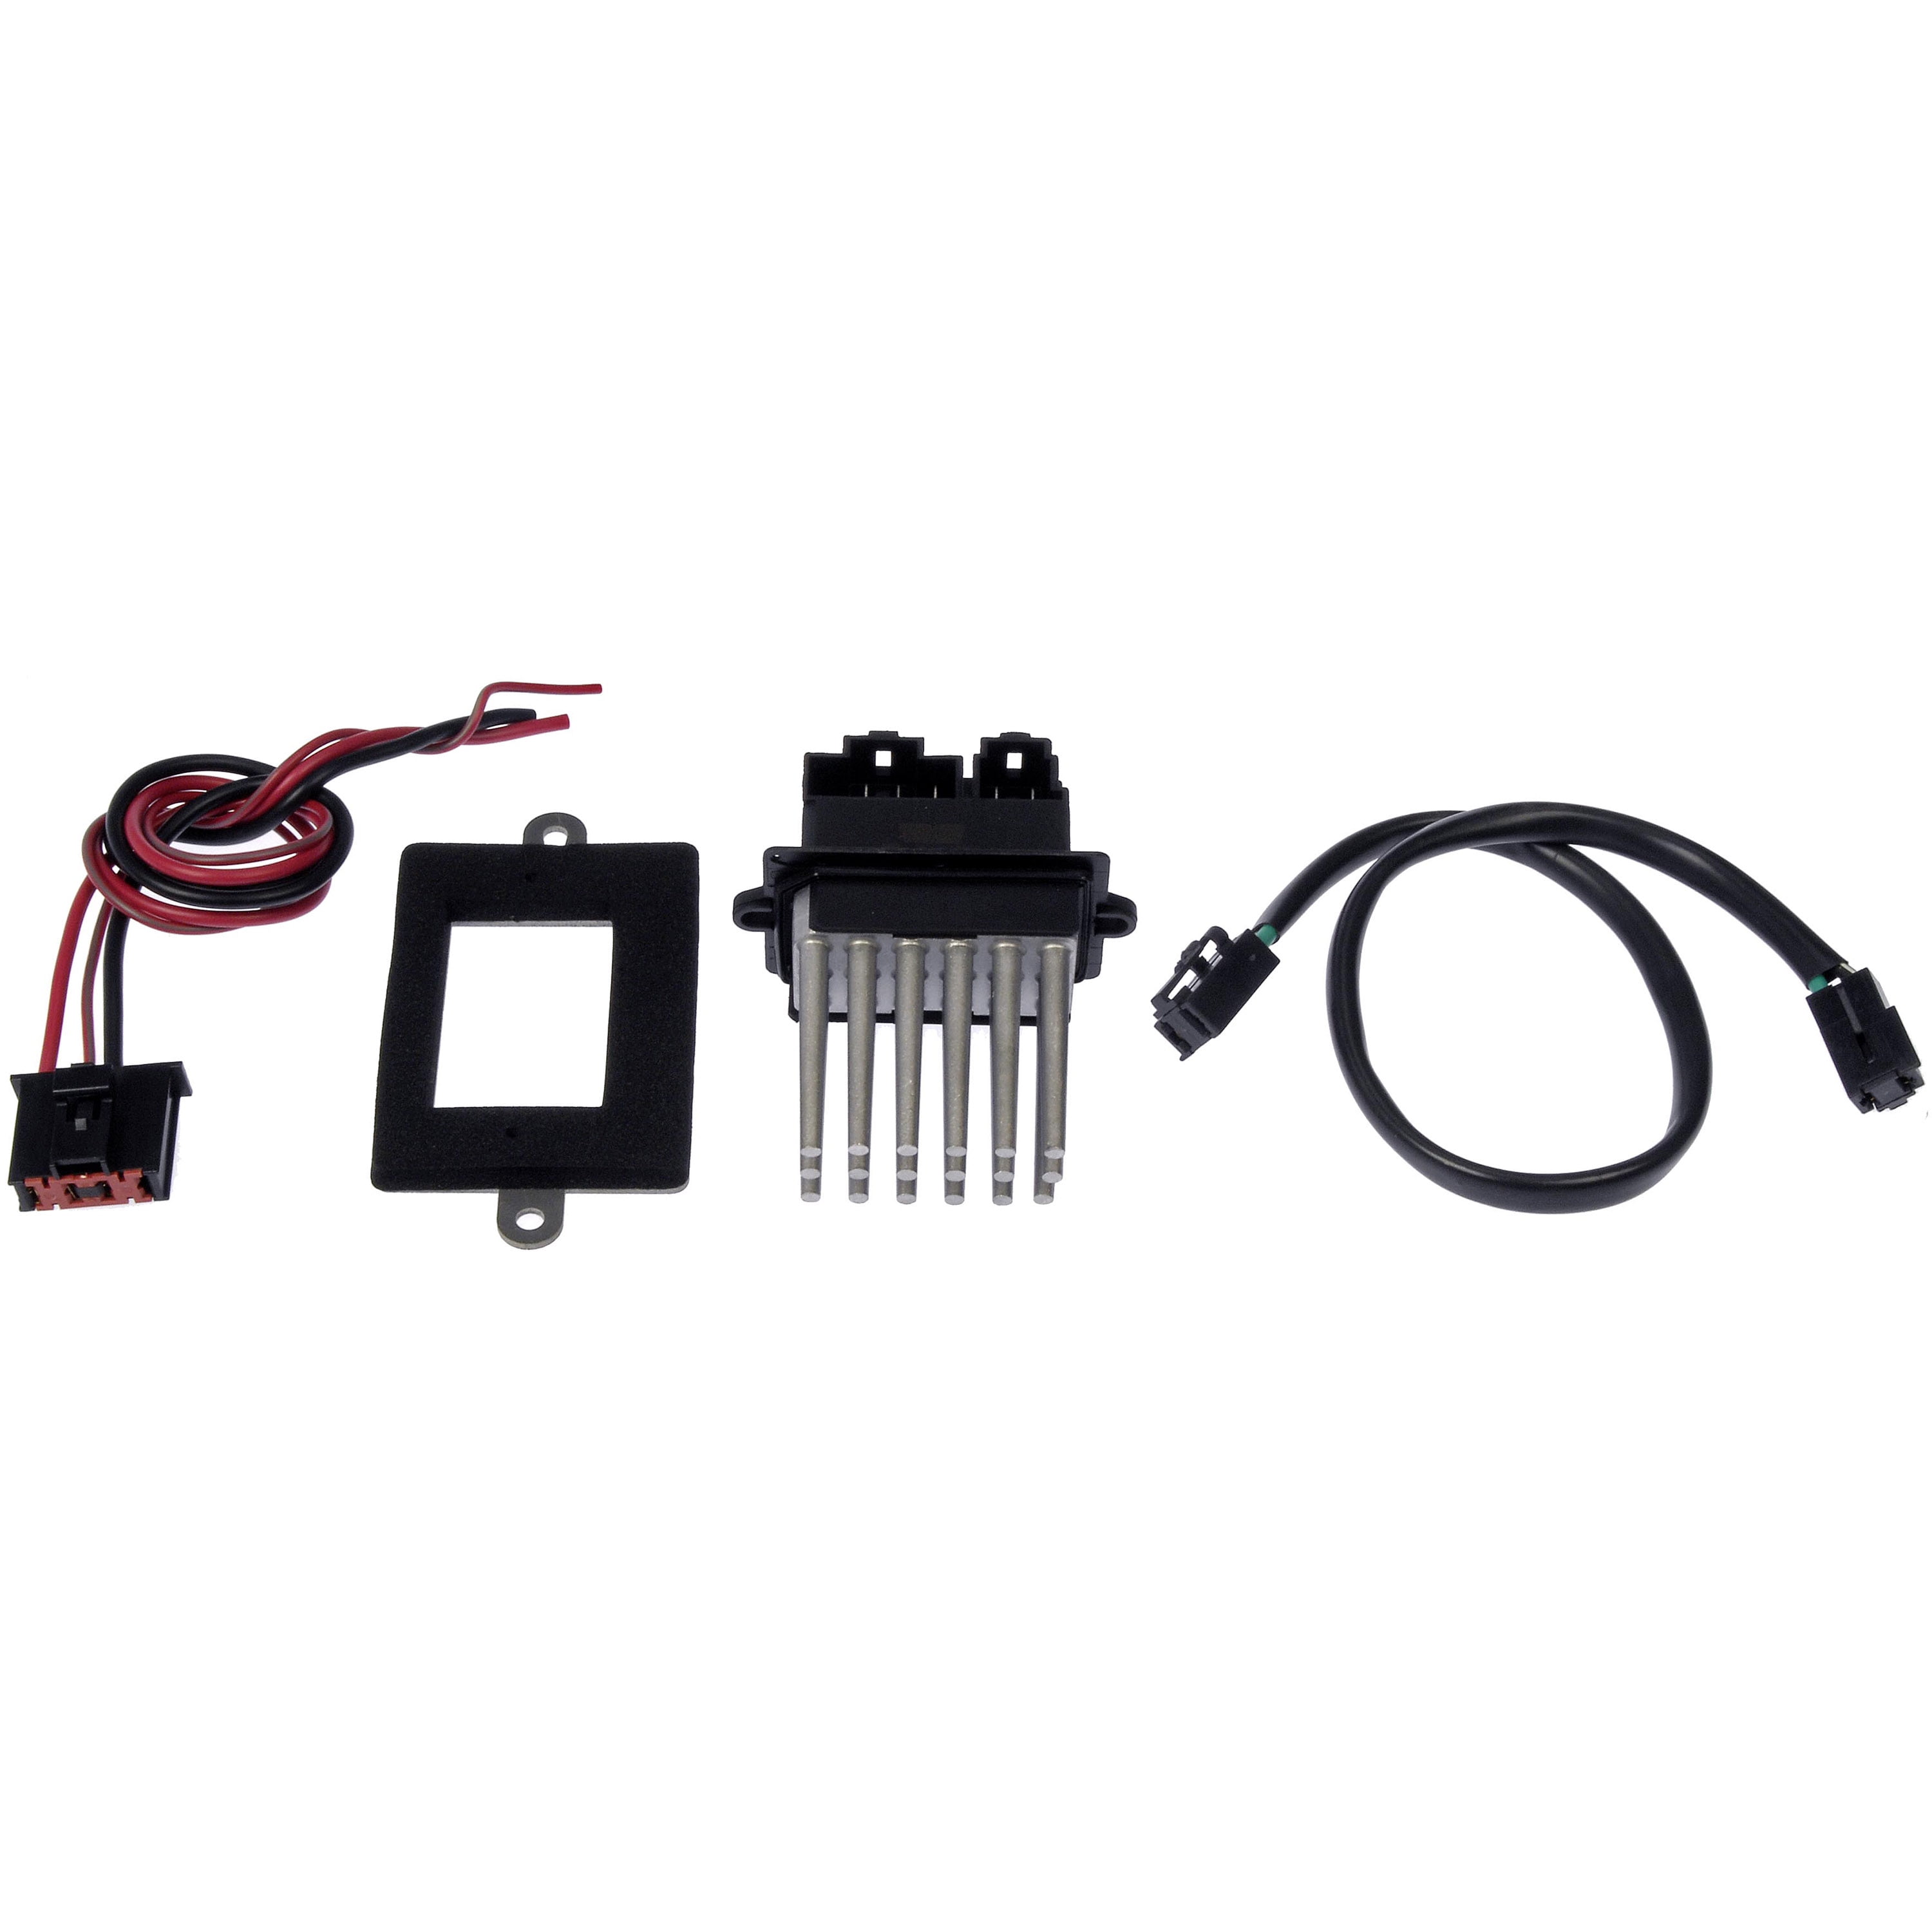 Dorman 973-5088 HVAC Blower Motor Resistor Kit　並行輸入品 - 5